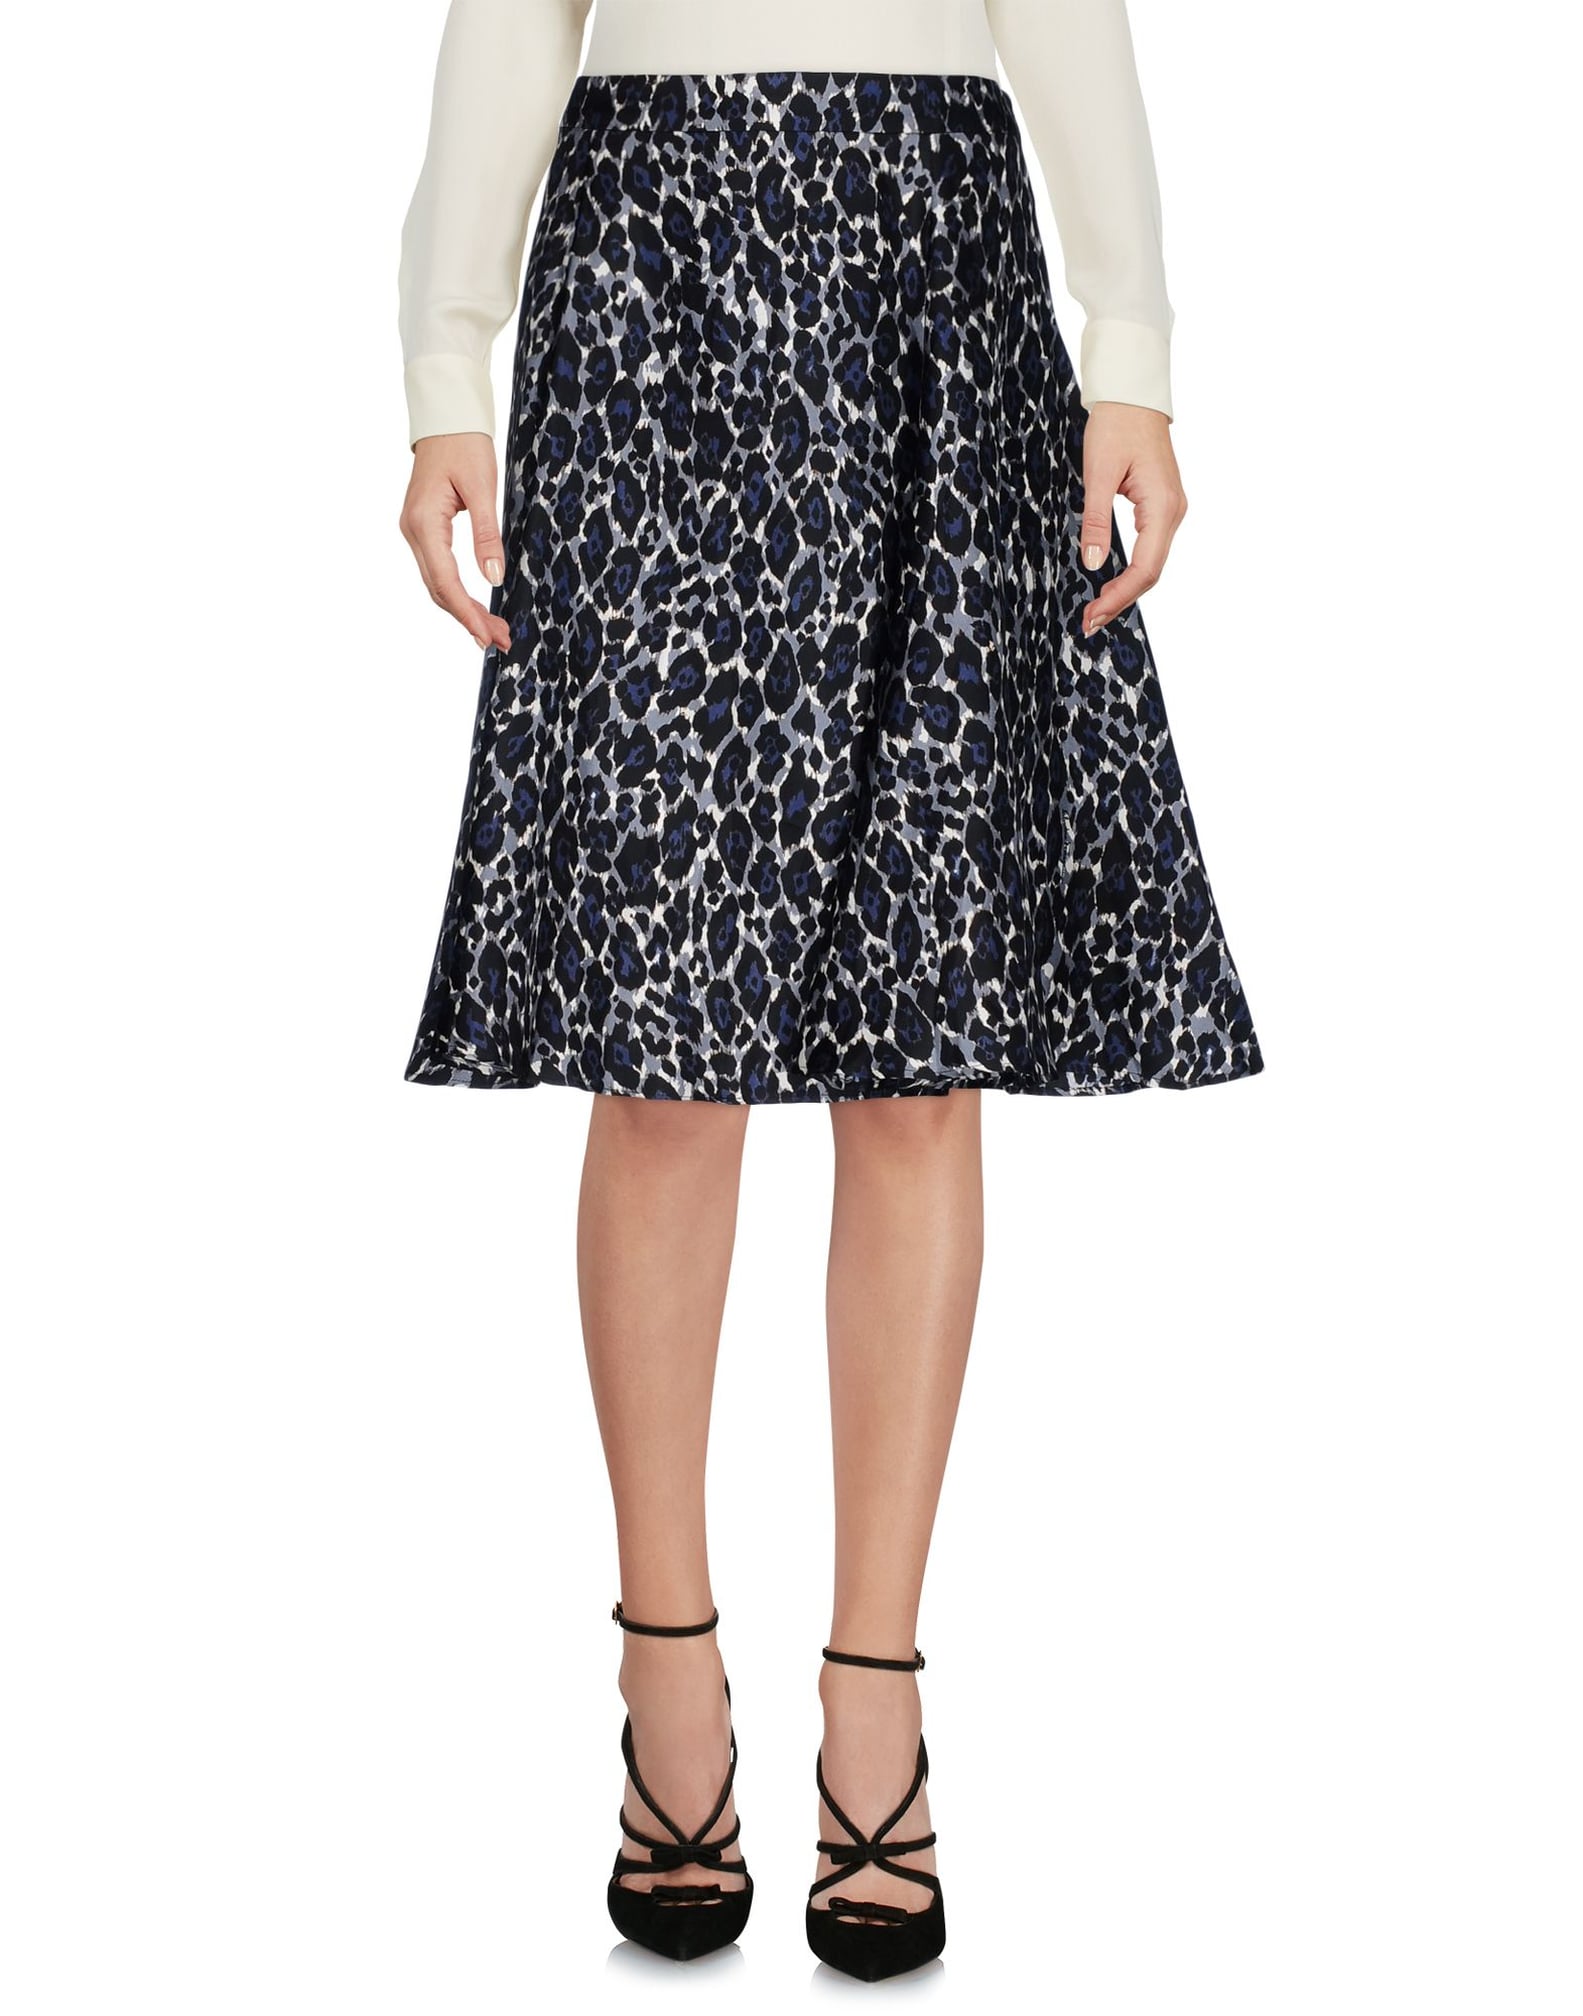 Queen Letizia Leopard Skirt | POPSUGAR Fashion